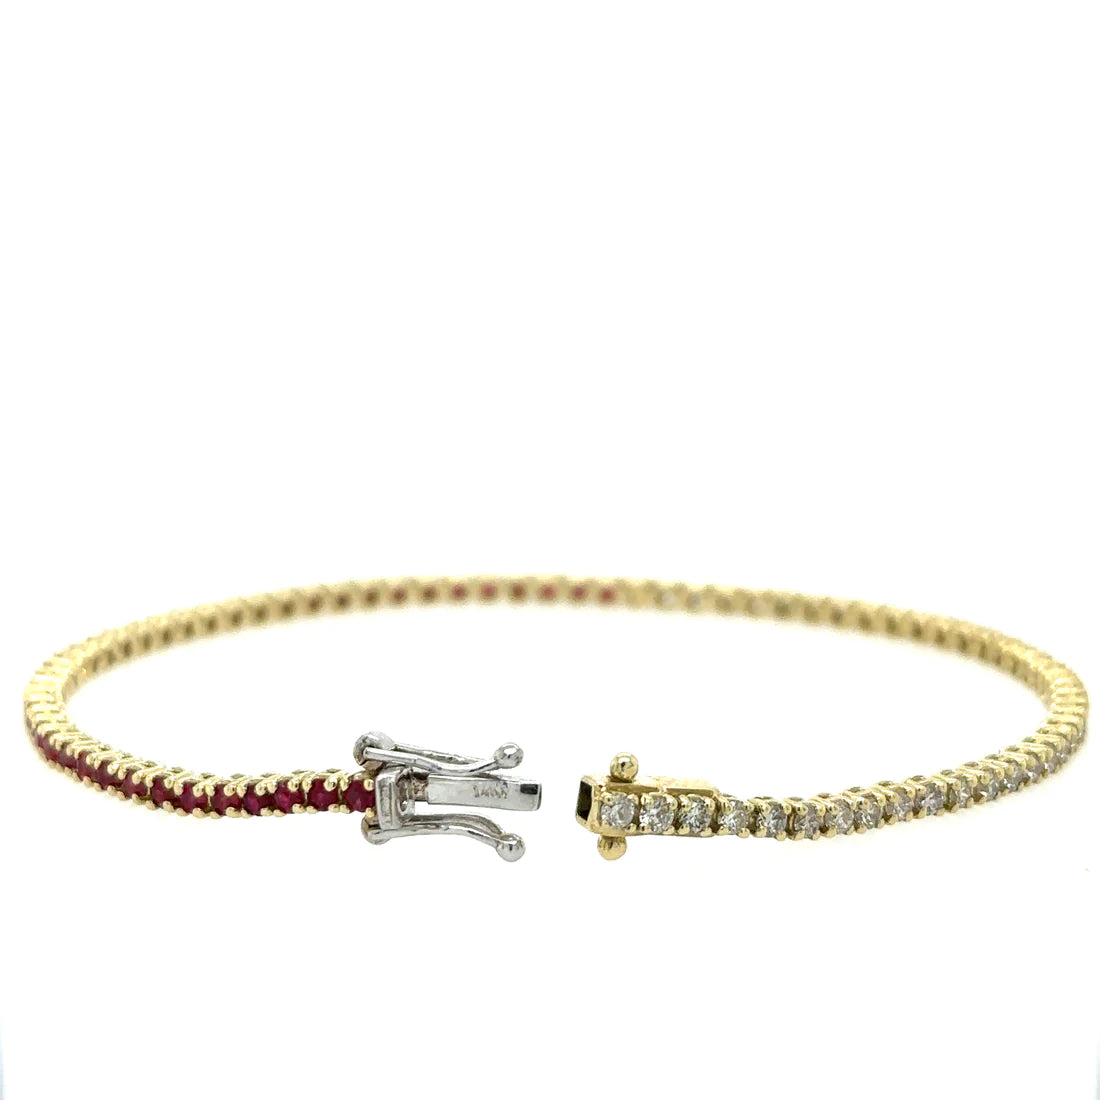 Diamonds / Ruby Tennis Bracelet